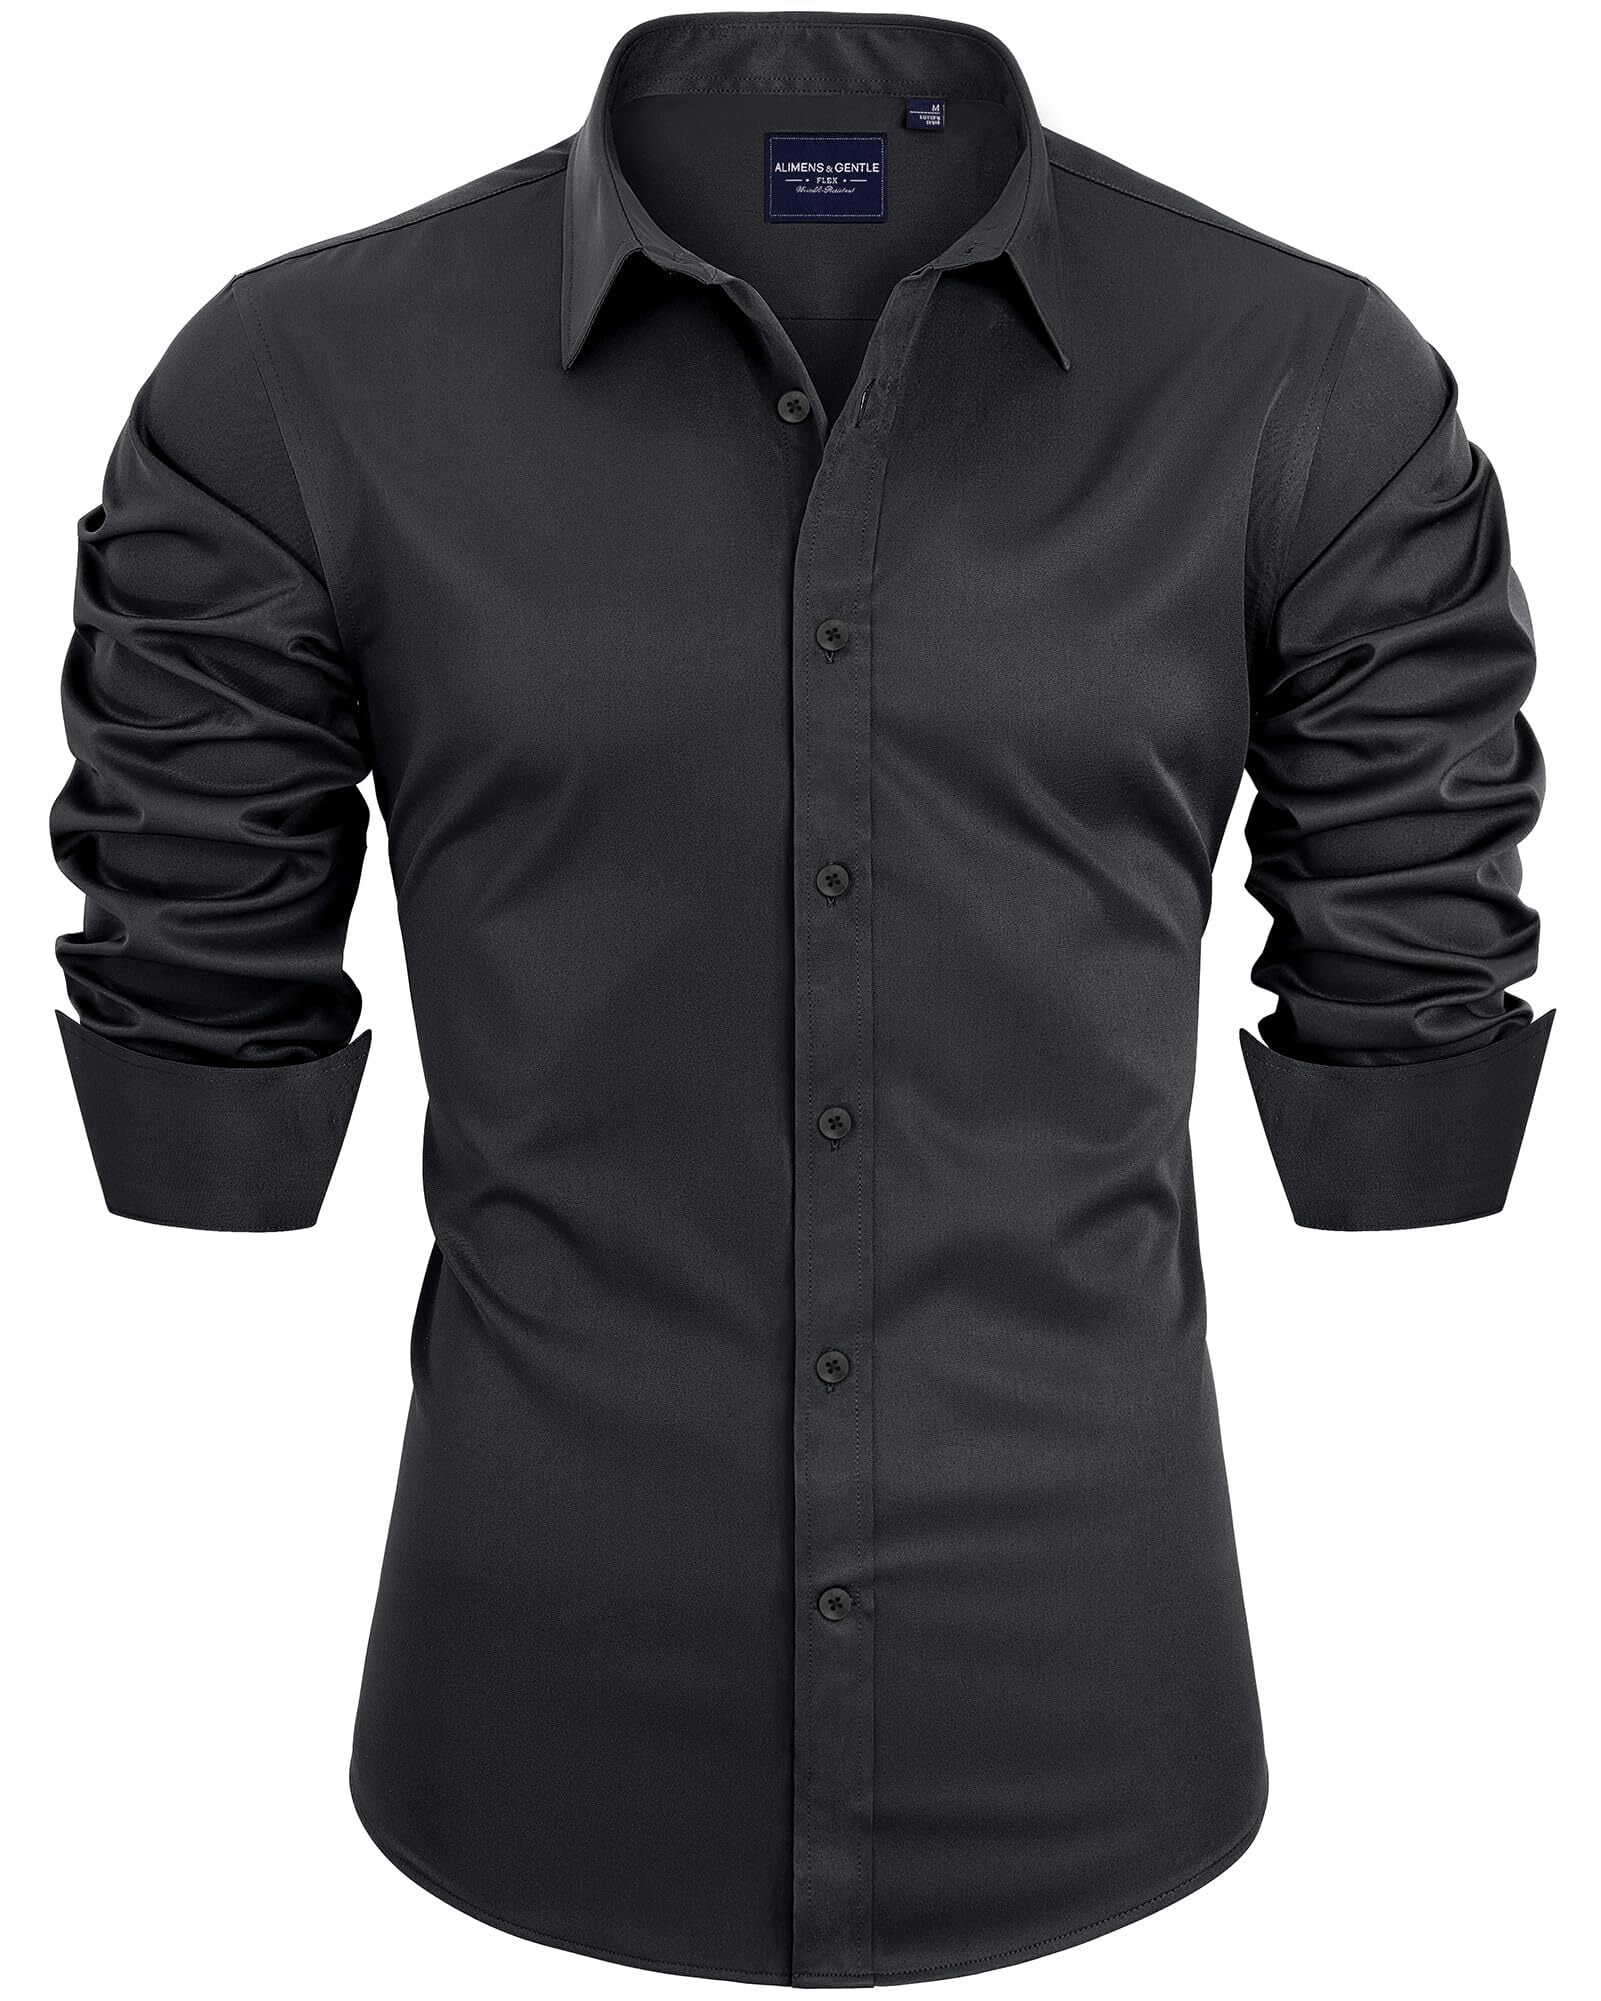 Alimens & Gentle Men's Long Sleeve Dress Shirt Wrinkle-Free Button Down ...